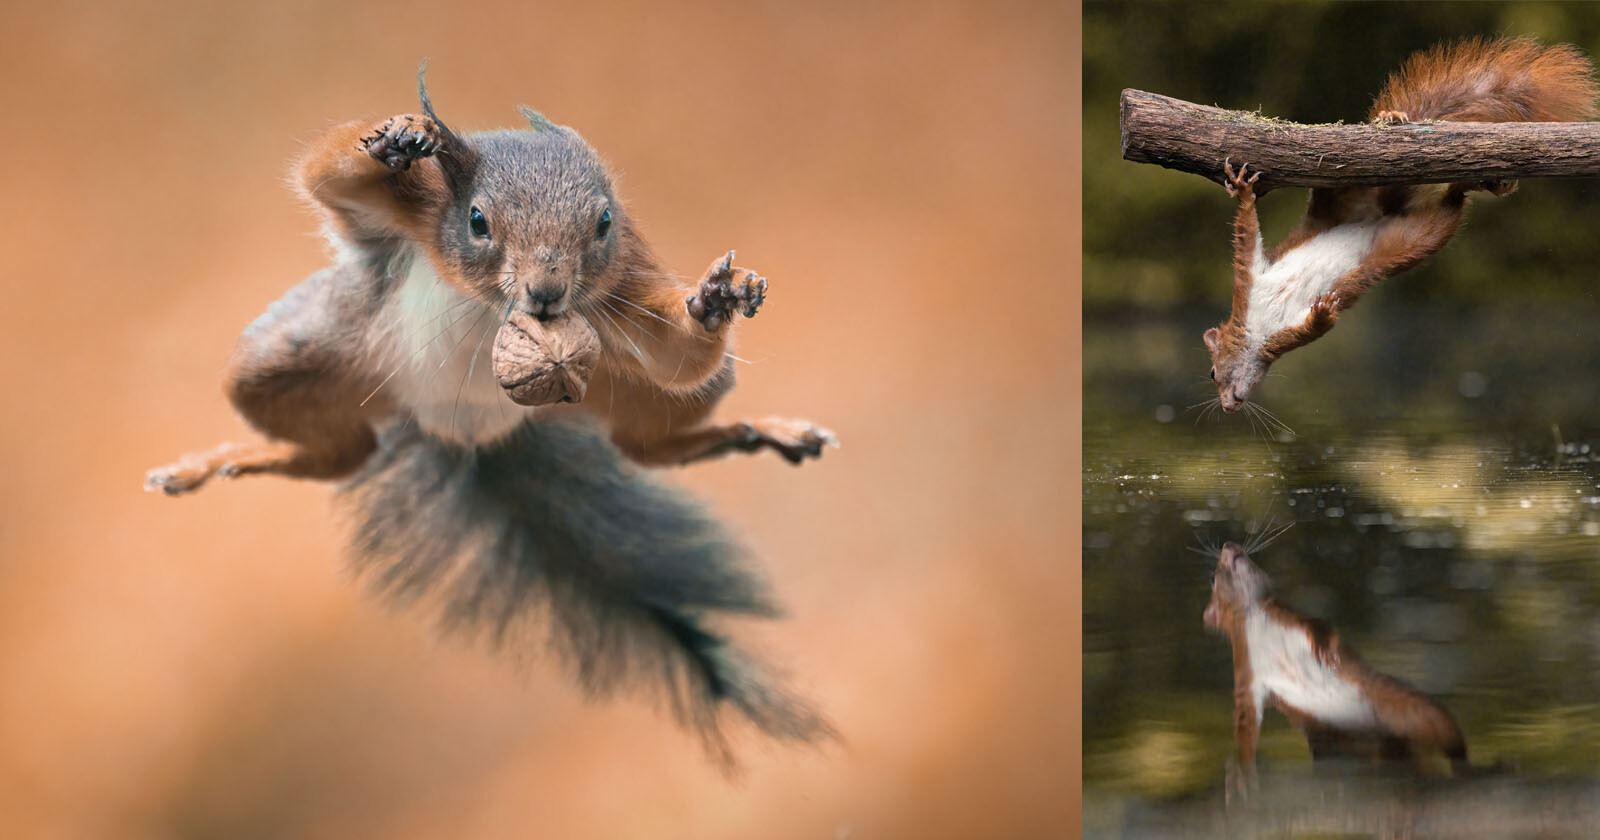 Acrobatic Squirrels Captured in a Series of Amazing Photos